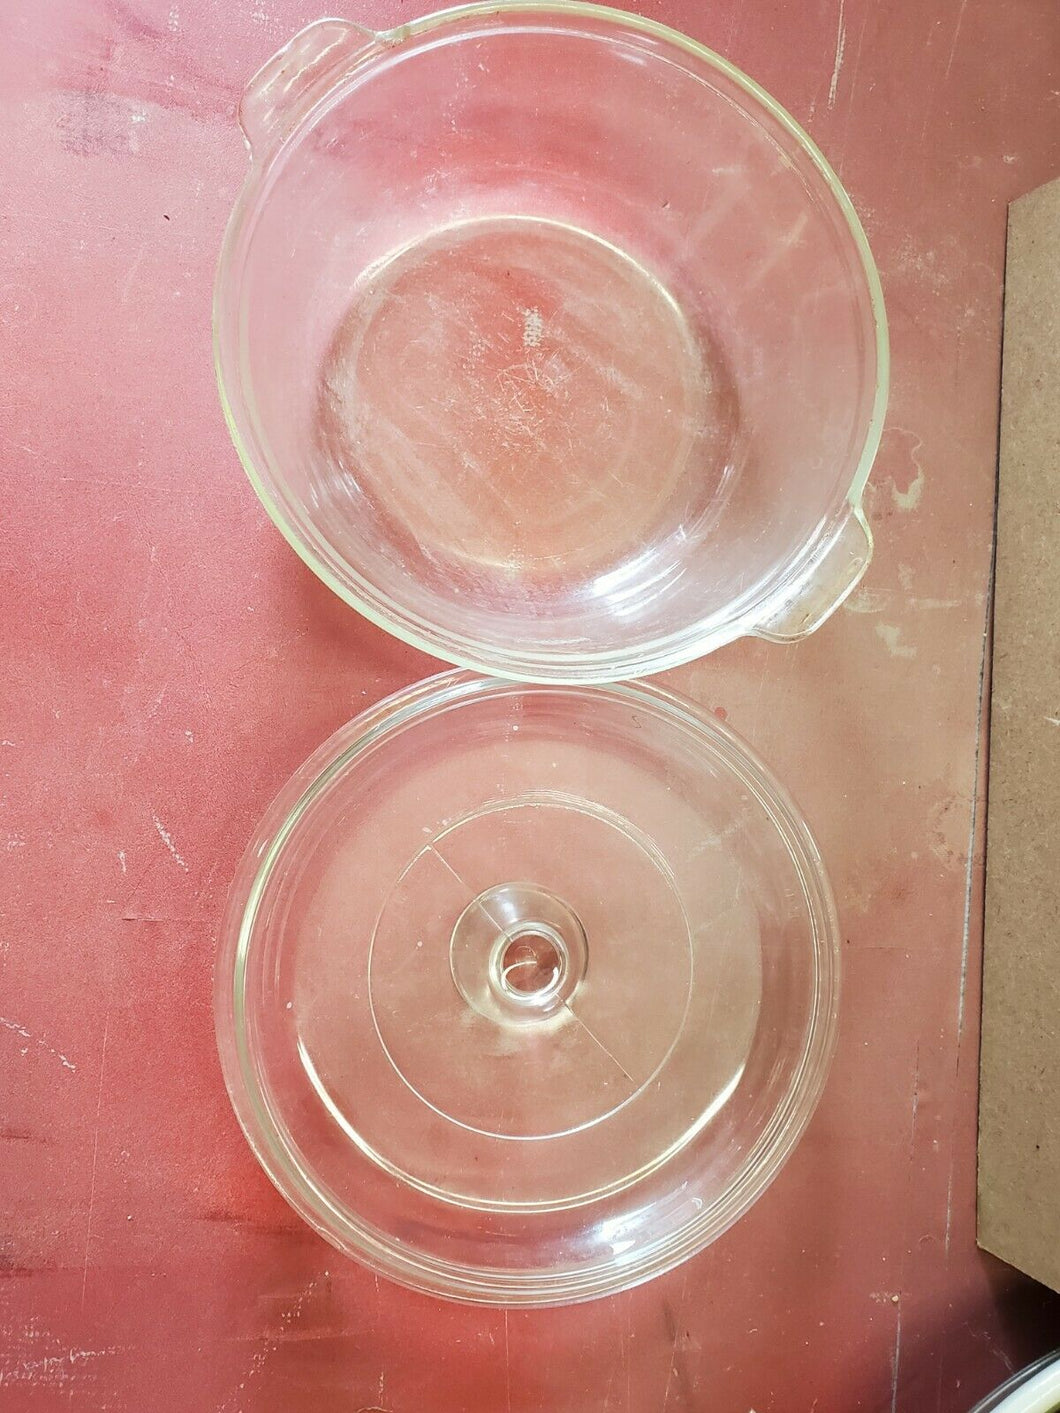 Vintage Pyrex Clear Glass 1 Quart Covered Casserole Dish 023-623-B